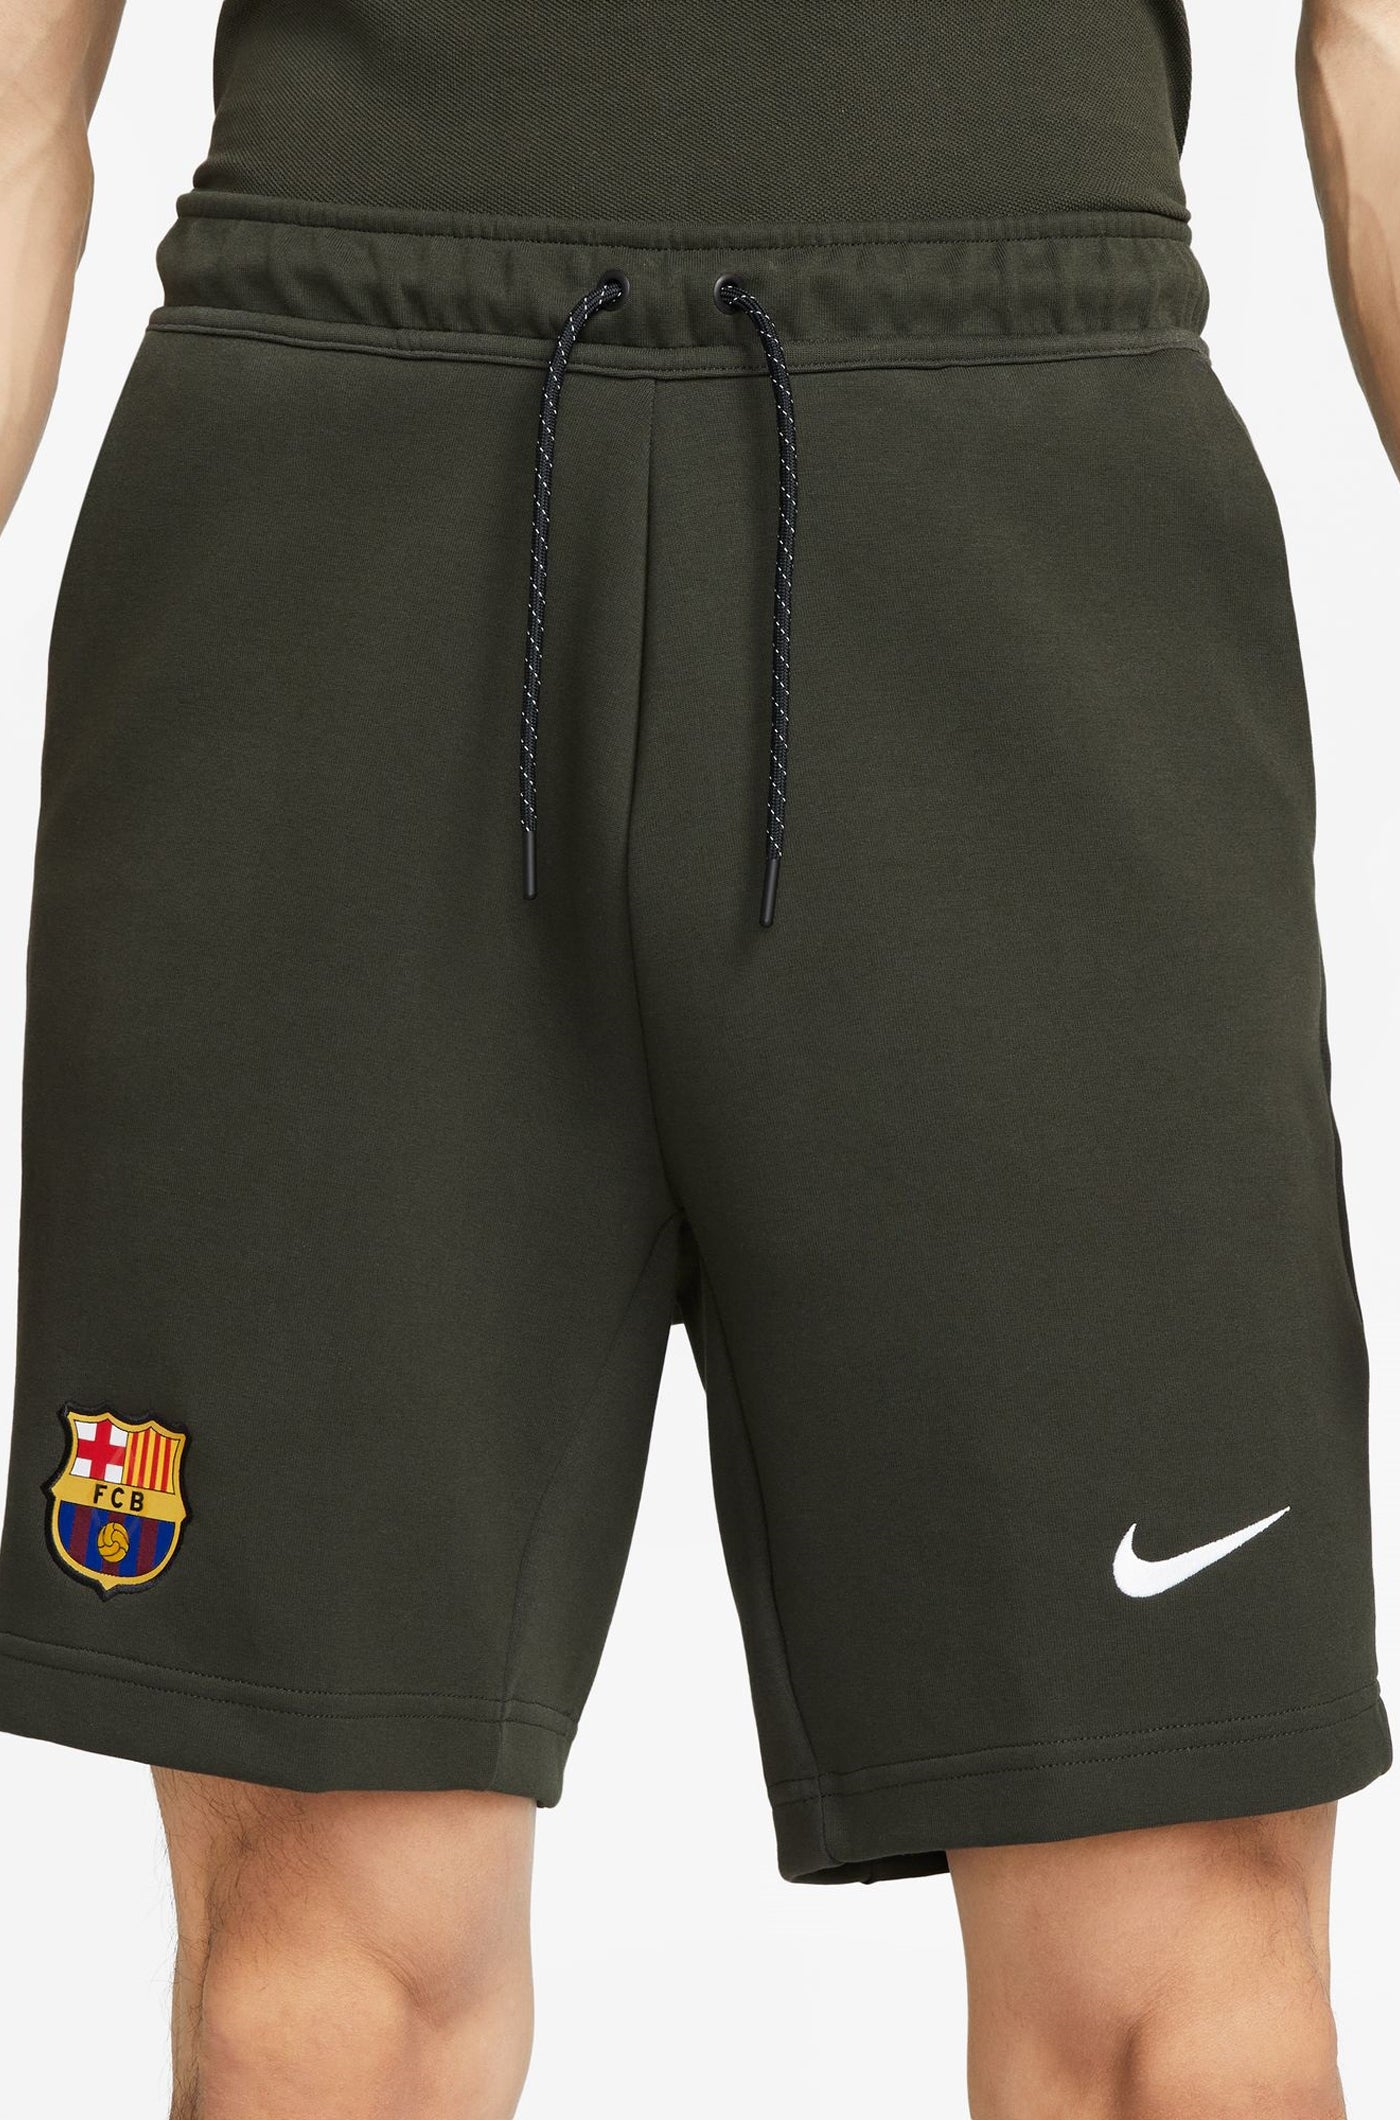 Pantalón verde corto Barça Nike